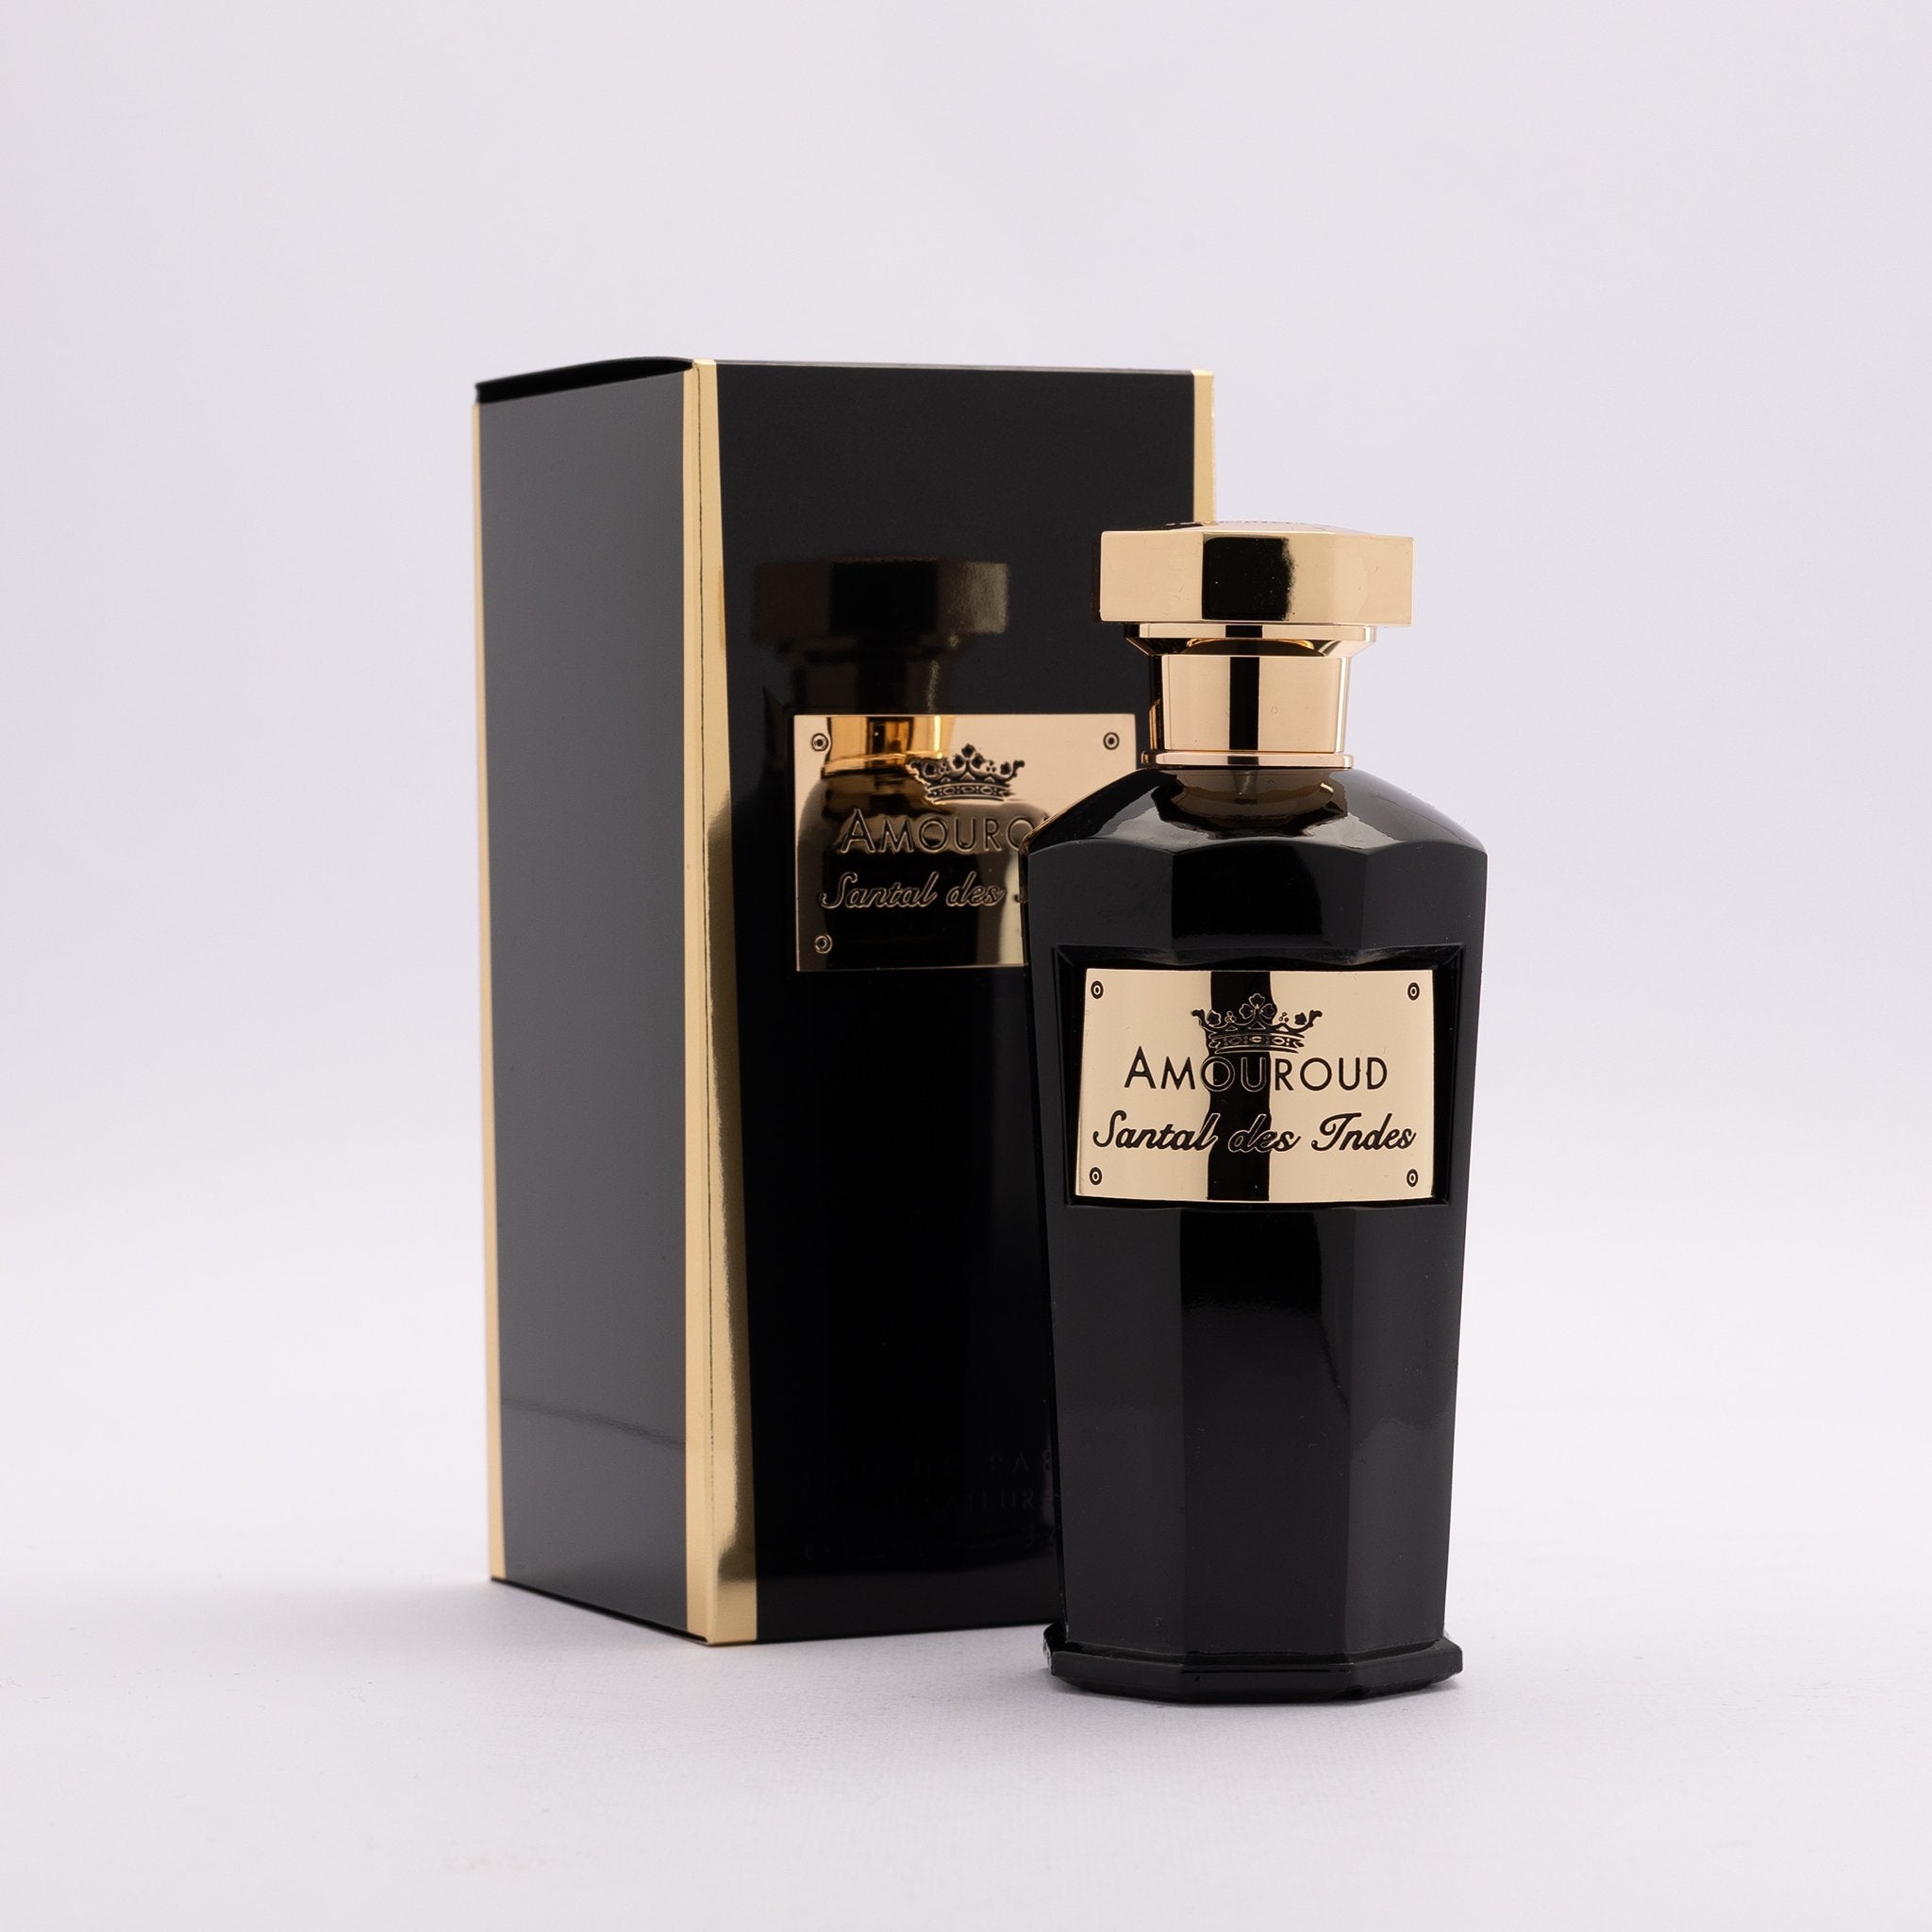 Santal des Indes – OTRO perfume concept